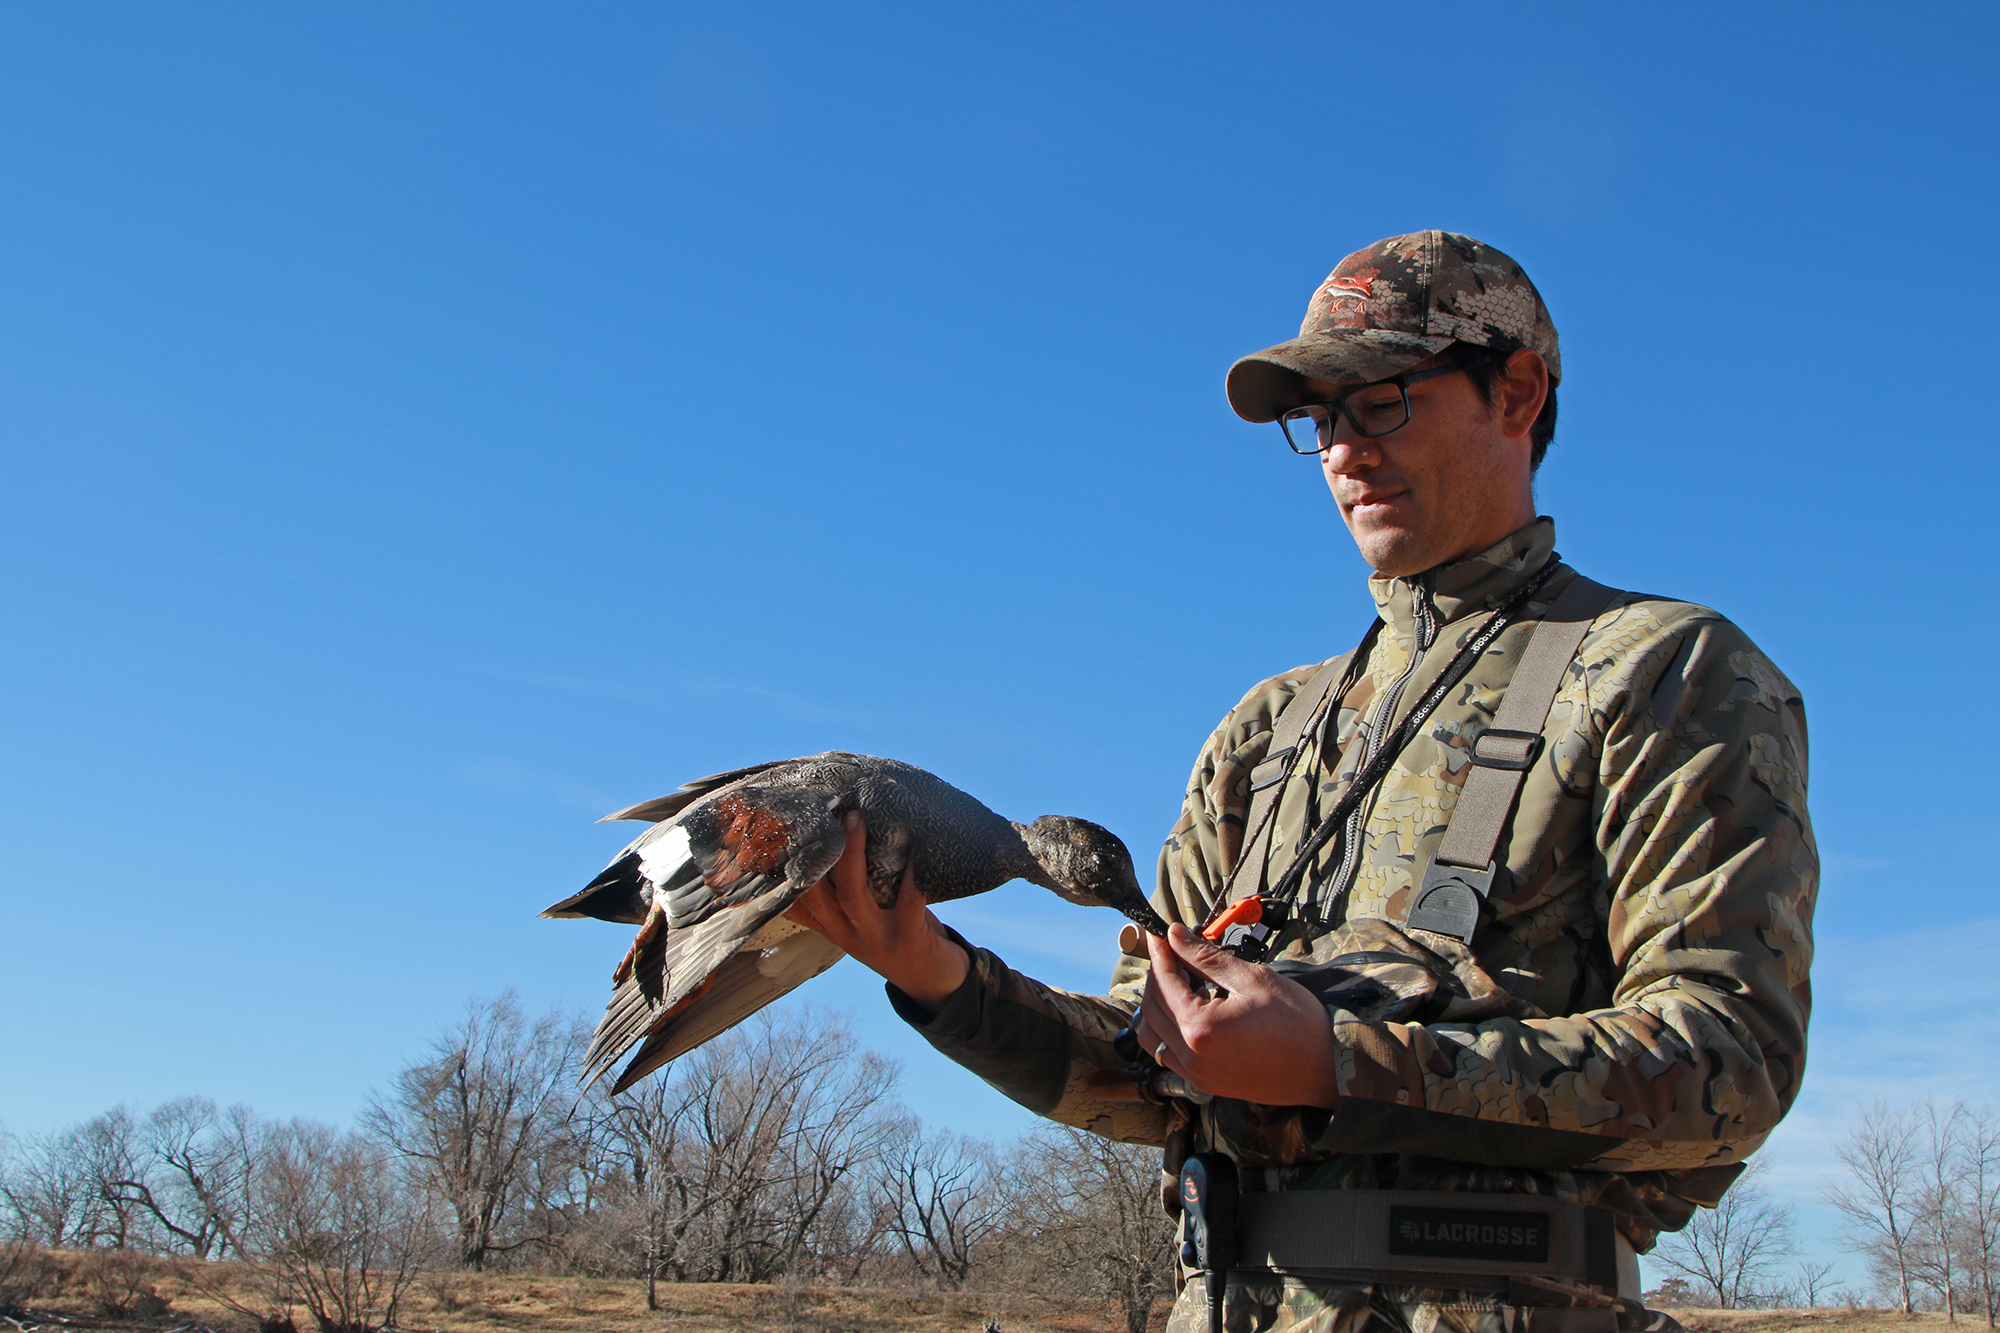 Gadwall duck hunt in Oklahoma.